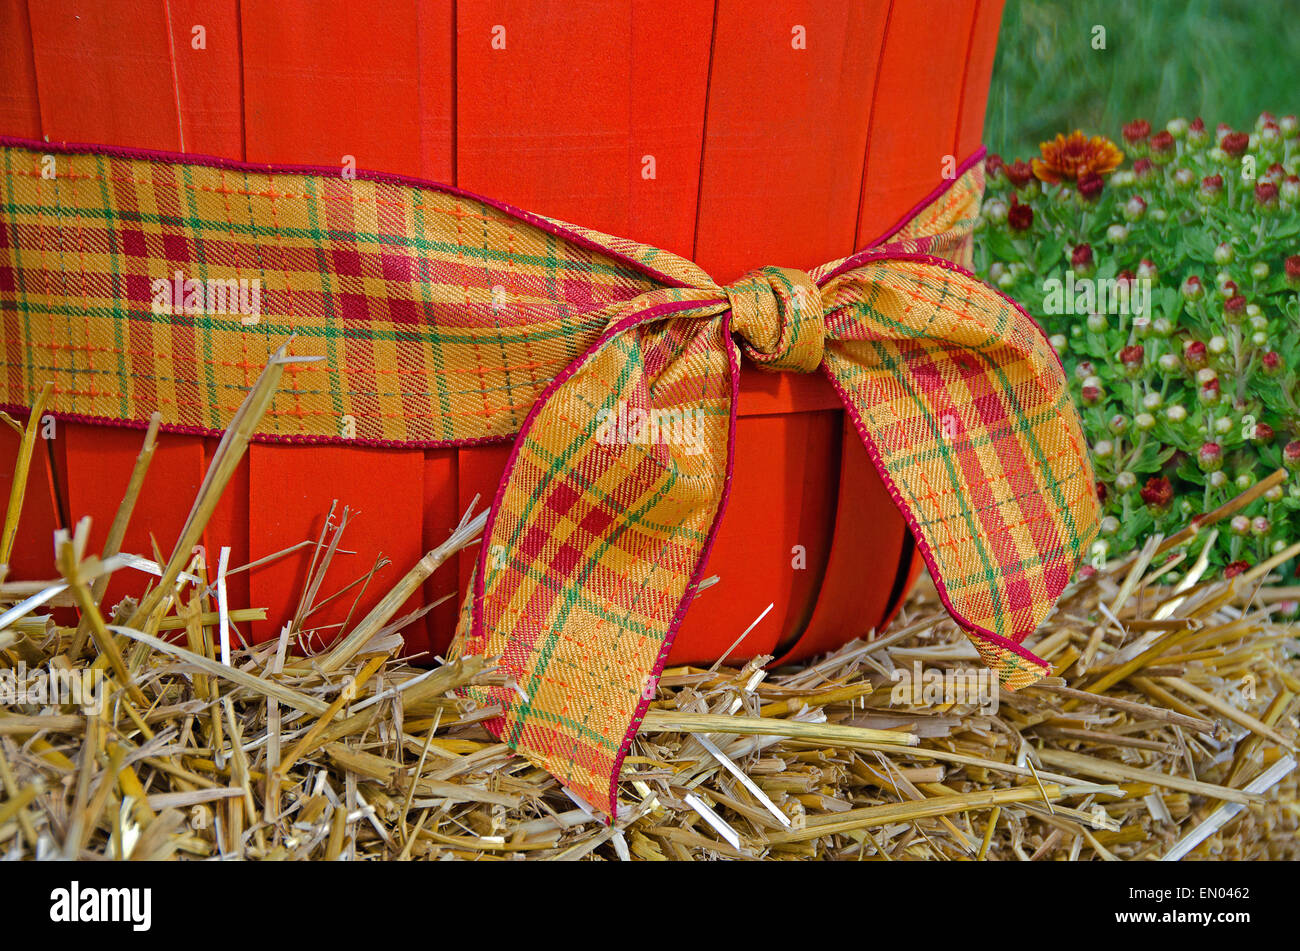 Close up of a plaid bow decorating an orange bushel basket on hay bale. Stock Photo